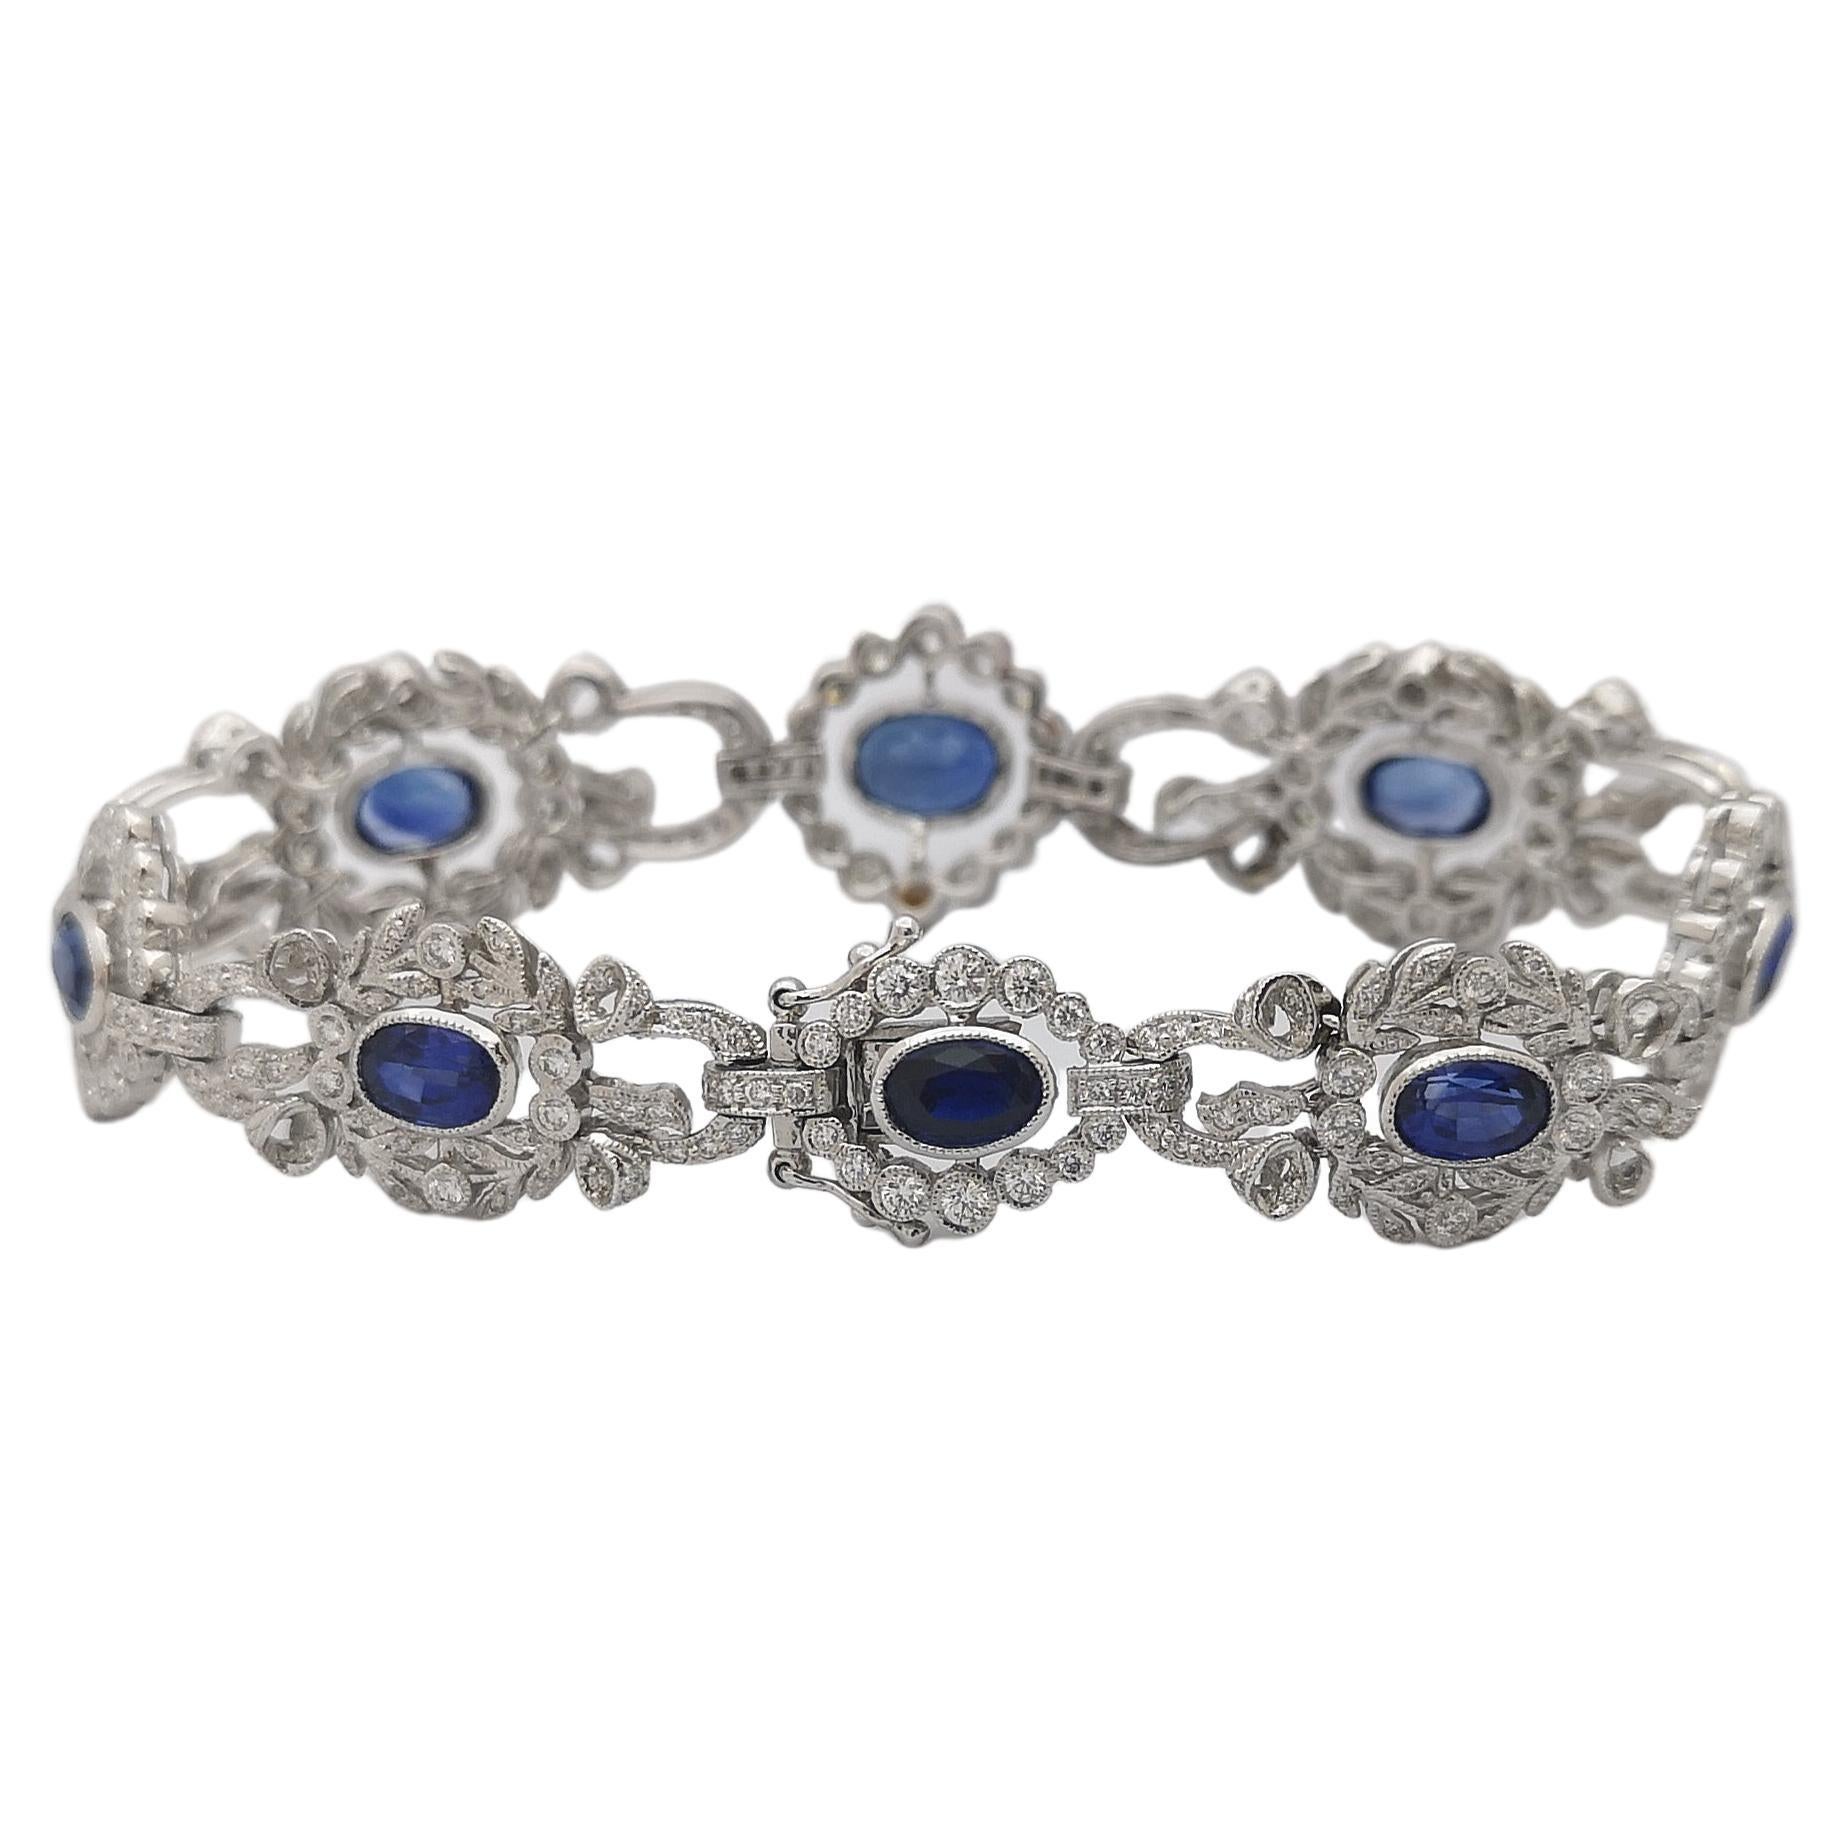  Blue Sapphire with Diamond Bracelet set in 18 Karat White Gold Settings For Sale